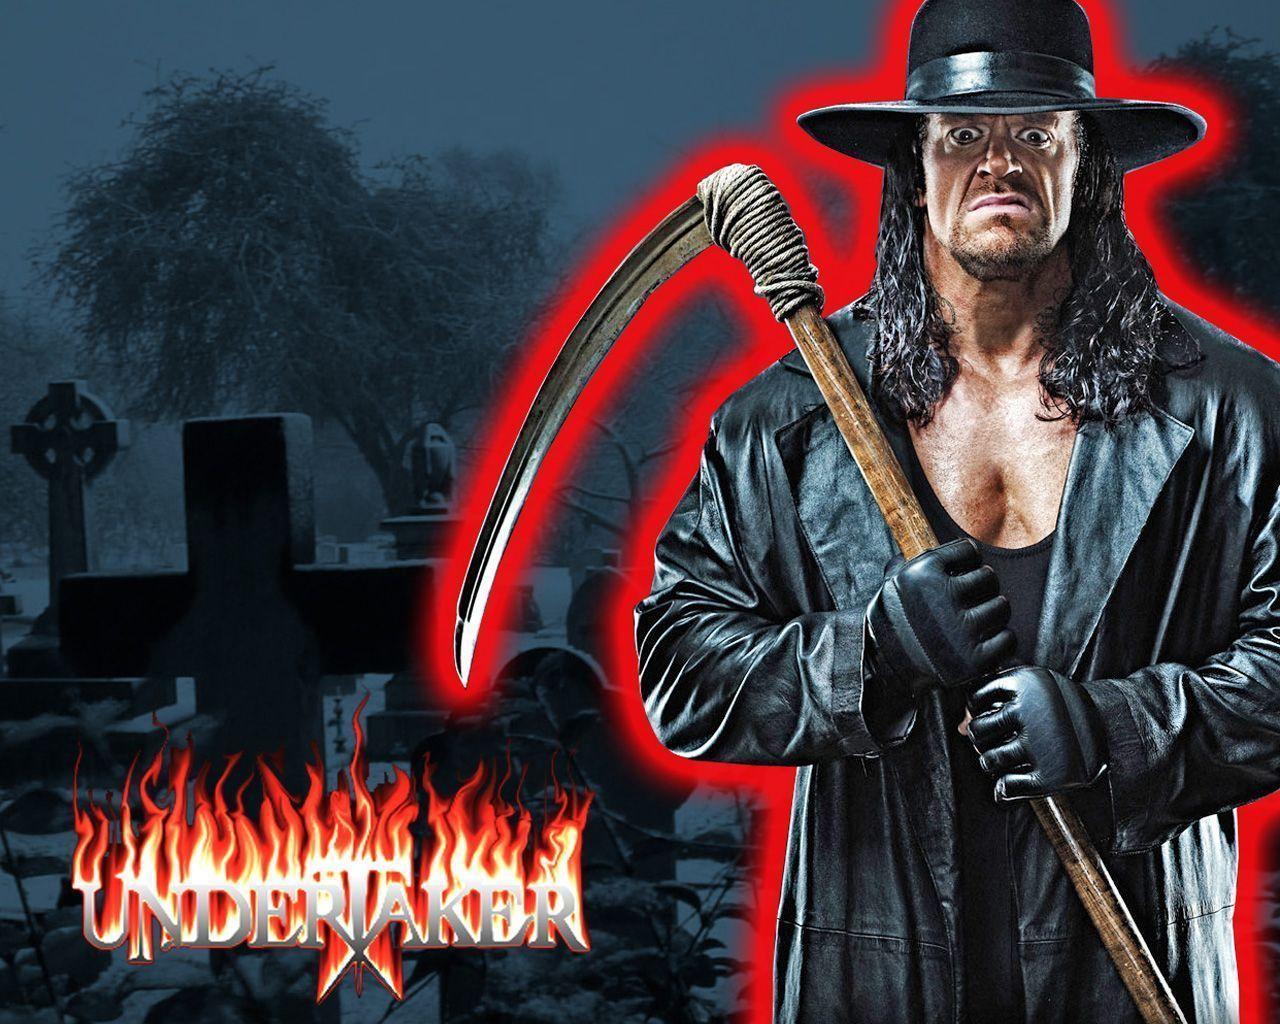 The Undertaker. WWE Fast Lane, WWE Superstars and WWE Wallpaper